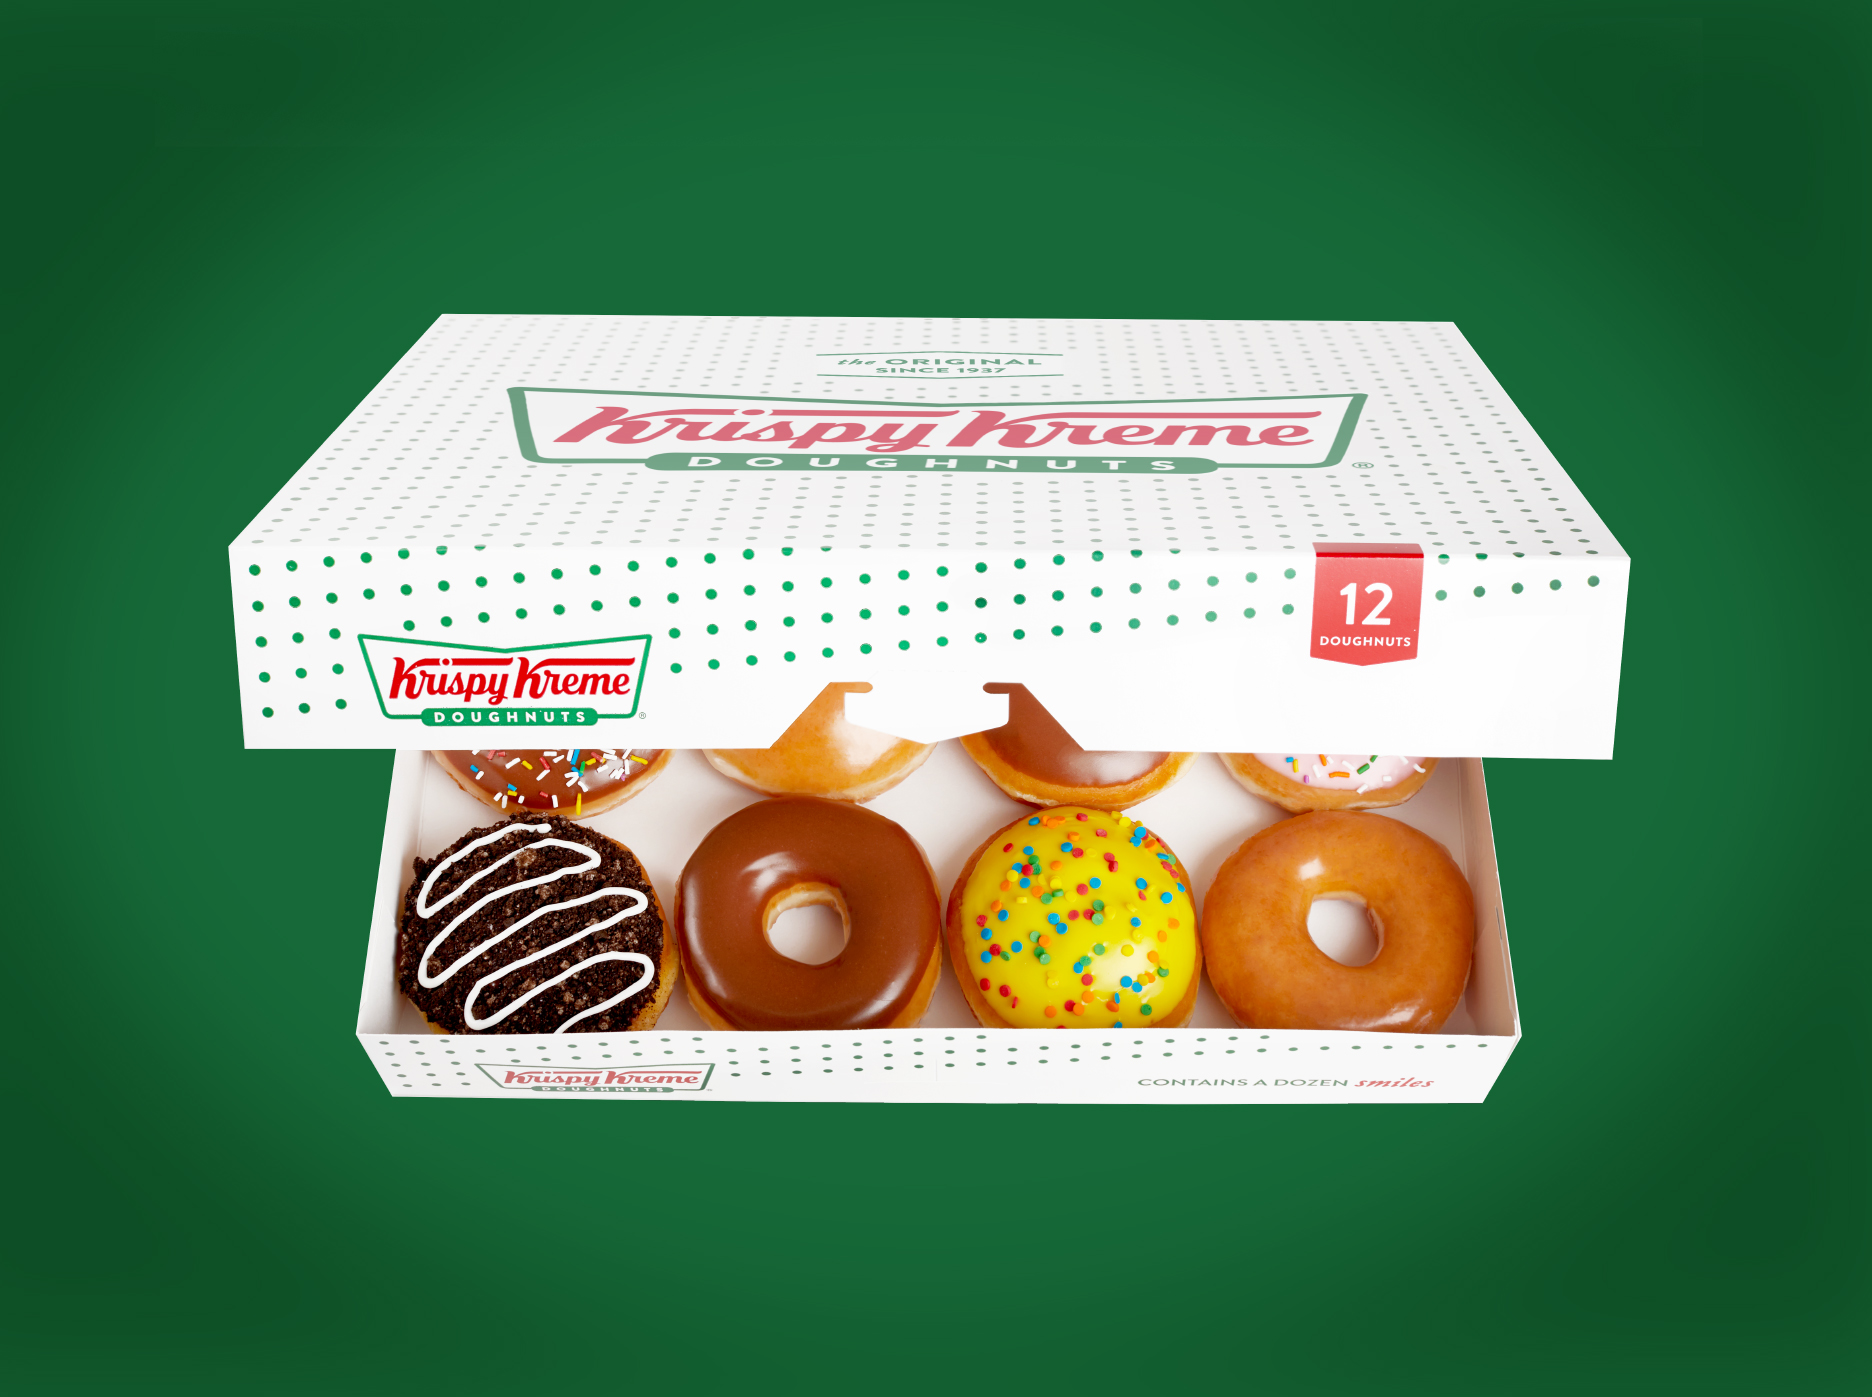 Krispy Kreme logo and donut in foreground